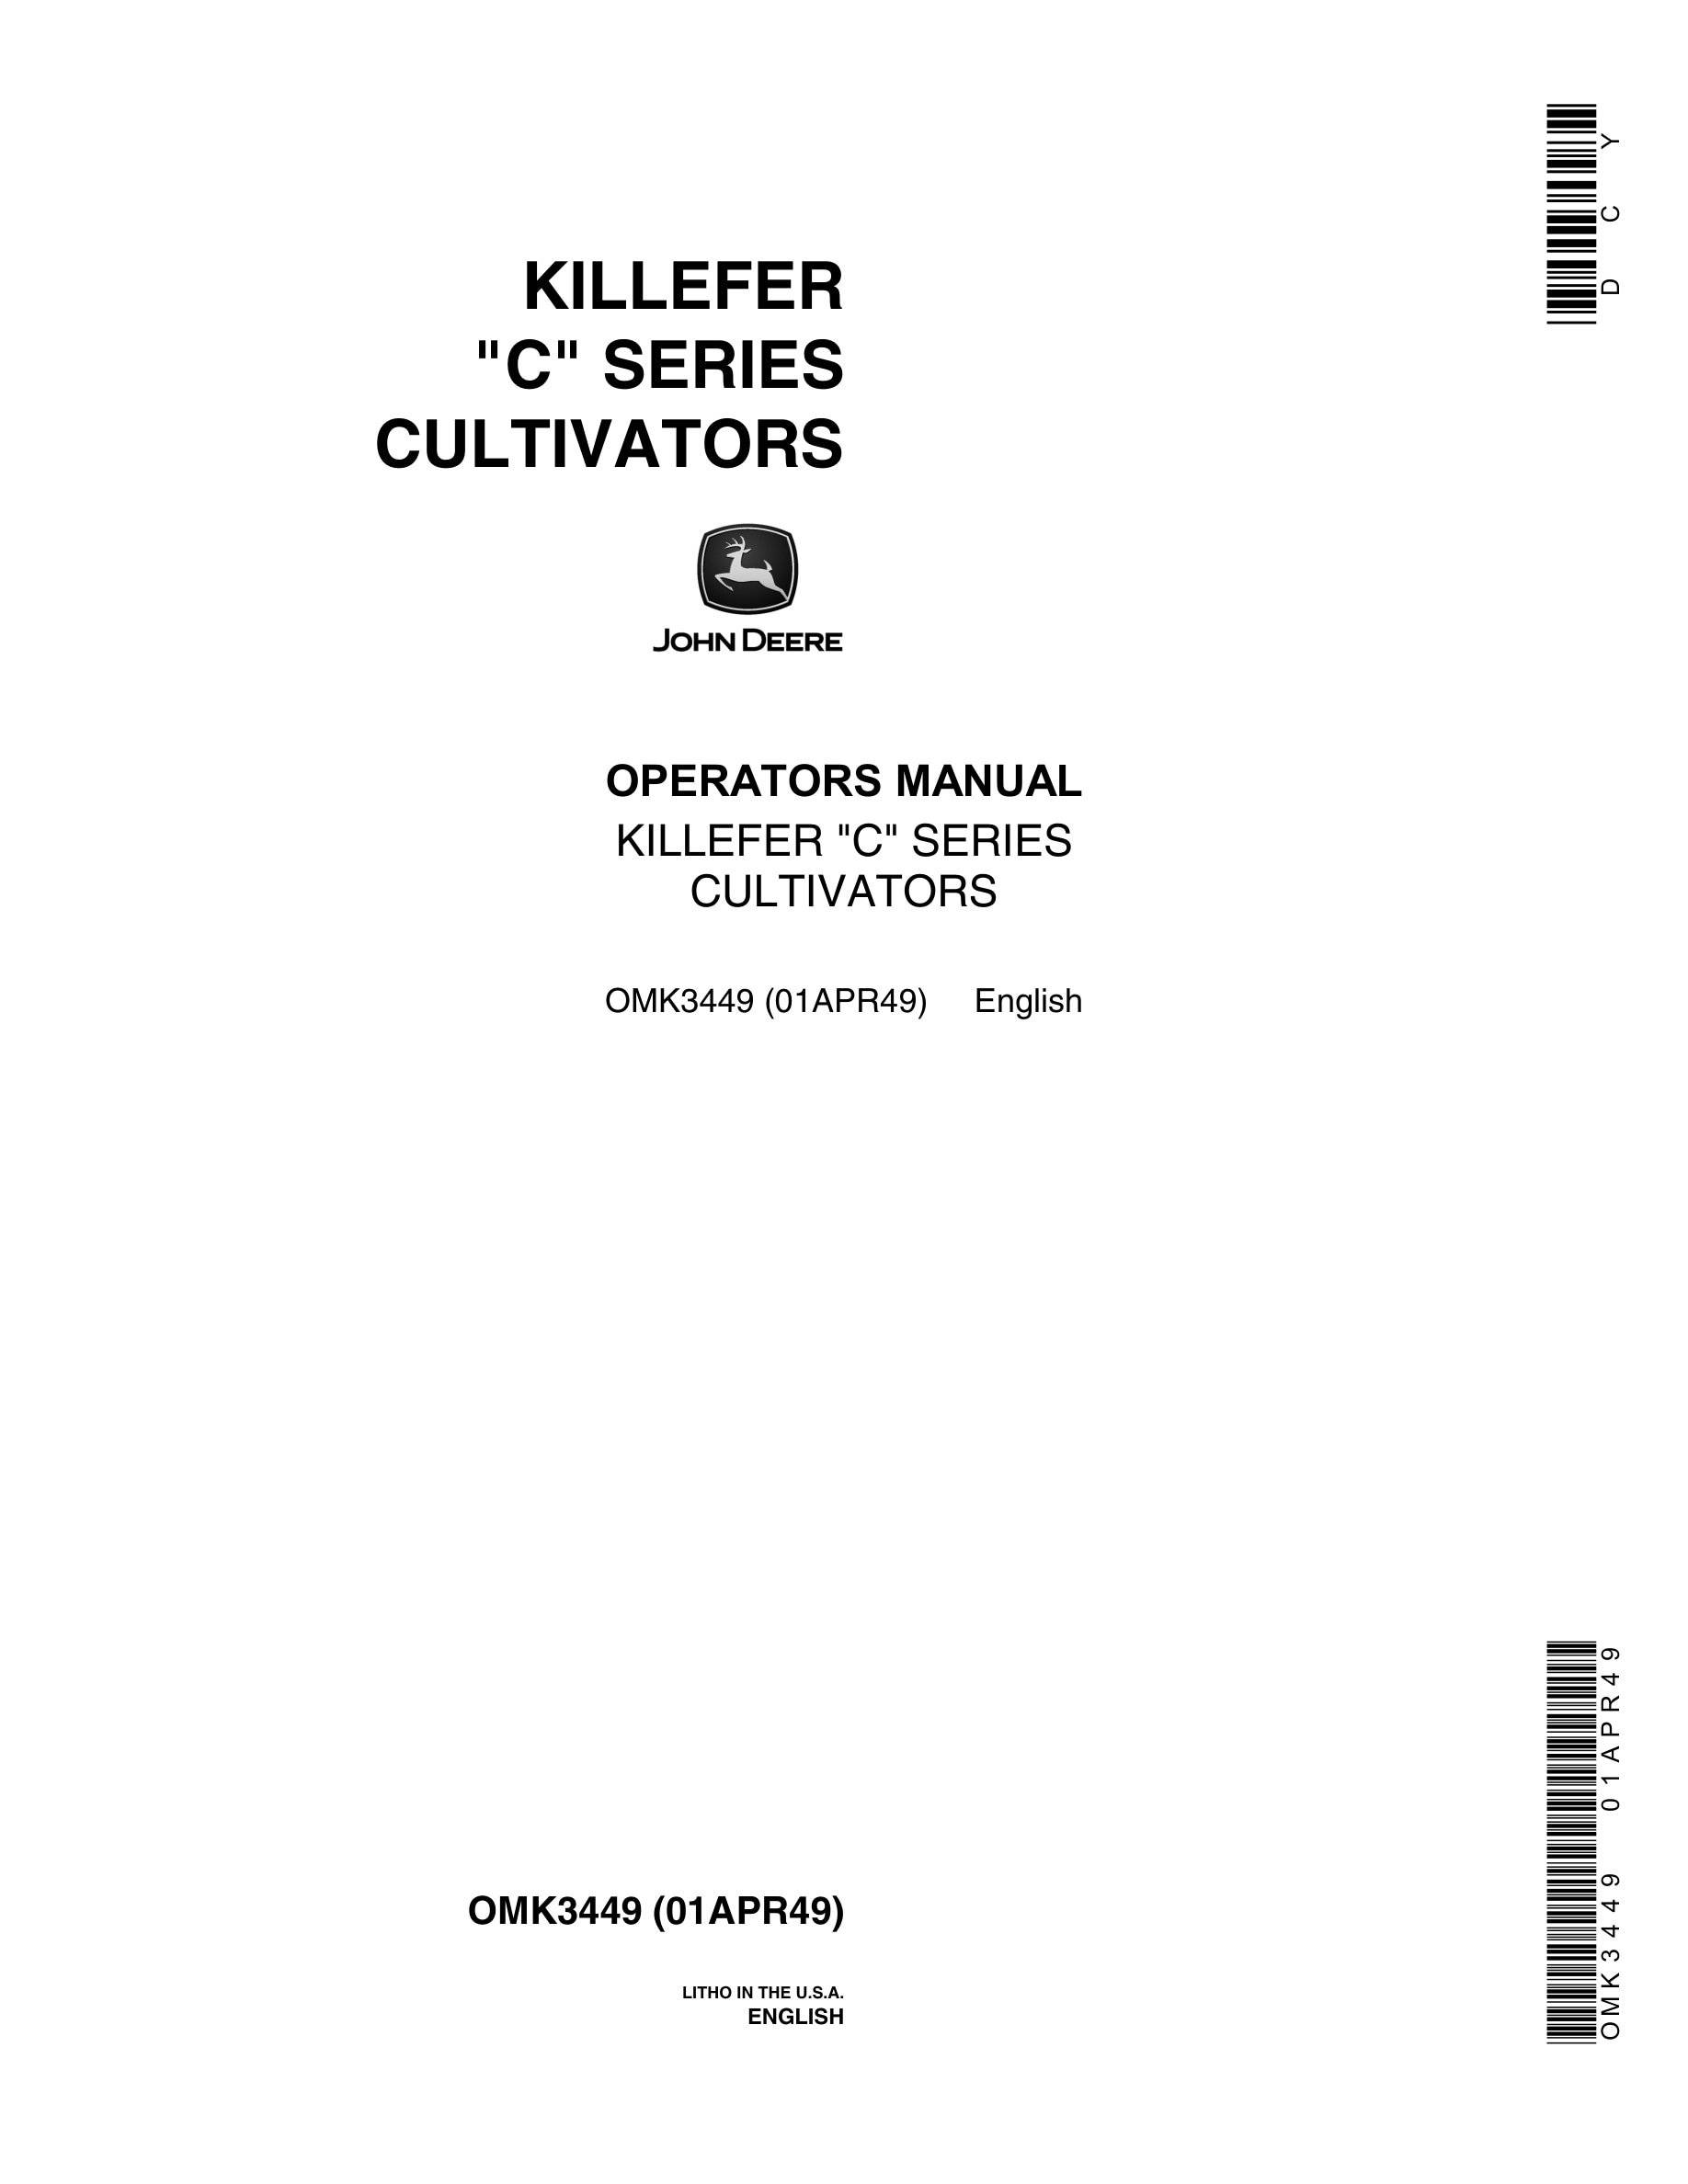 John Deere KILLEFER C SERIES CULTIVATOR Operator Manual OMK3449-1